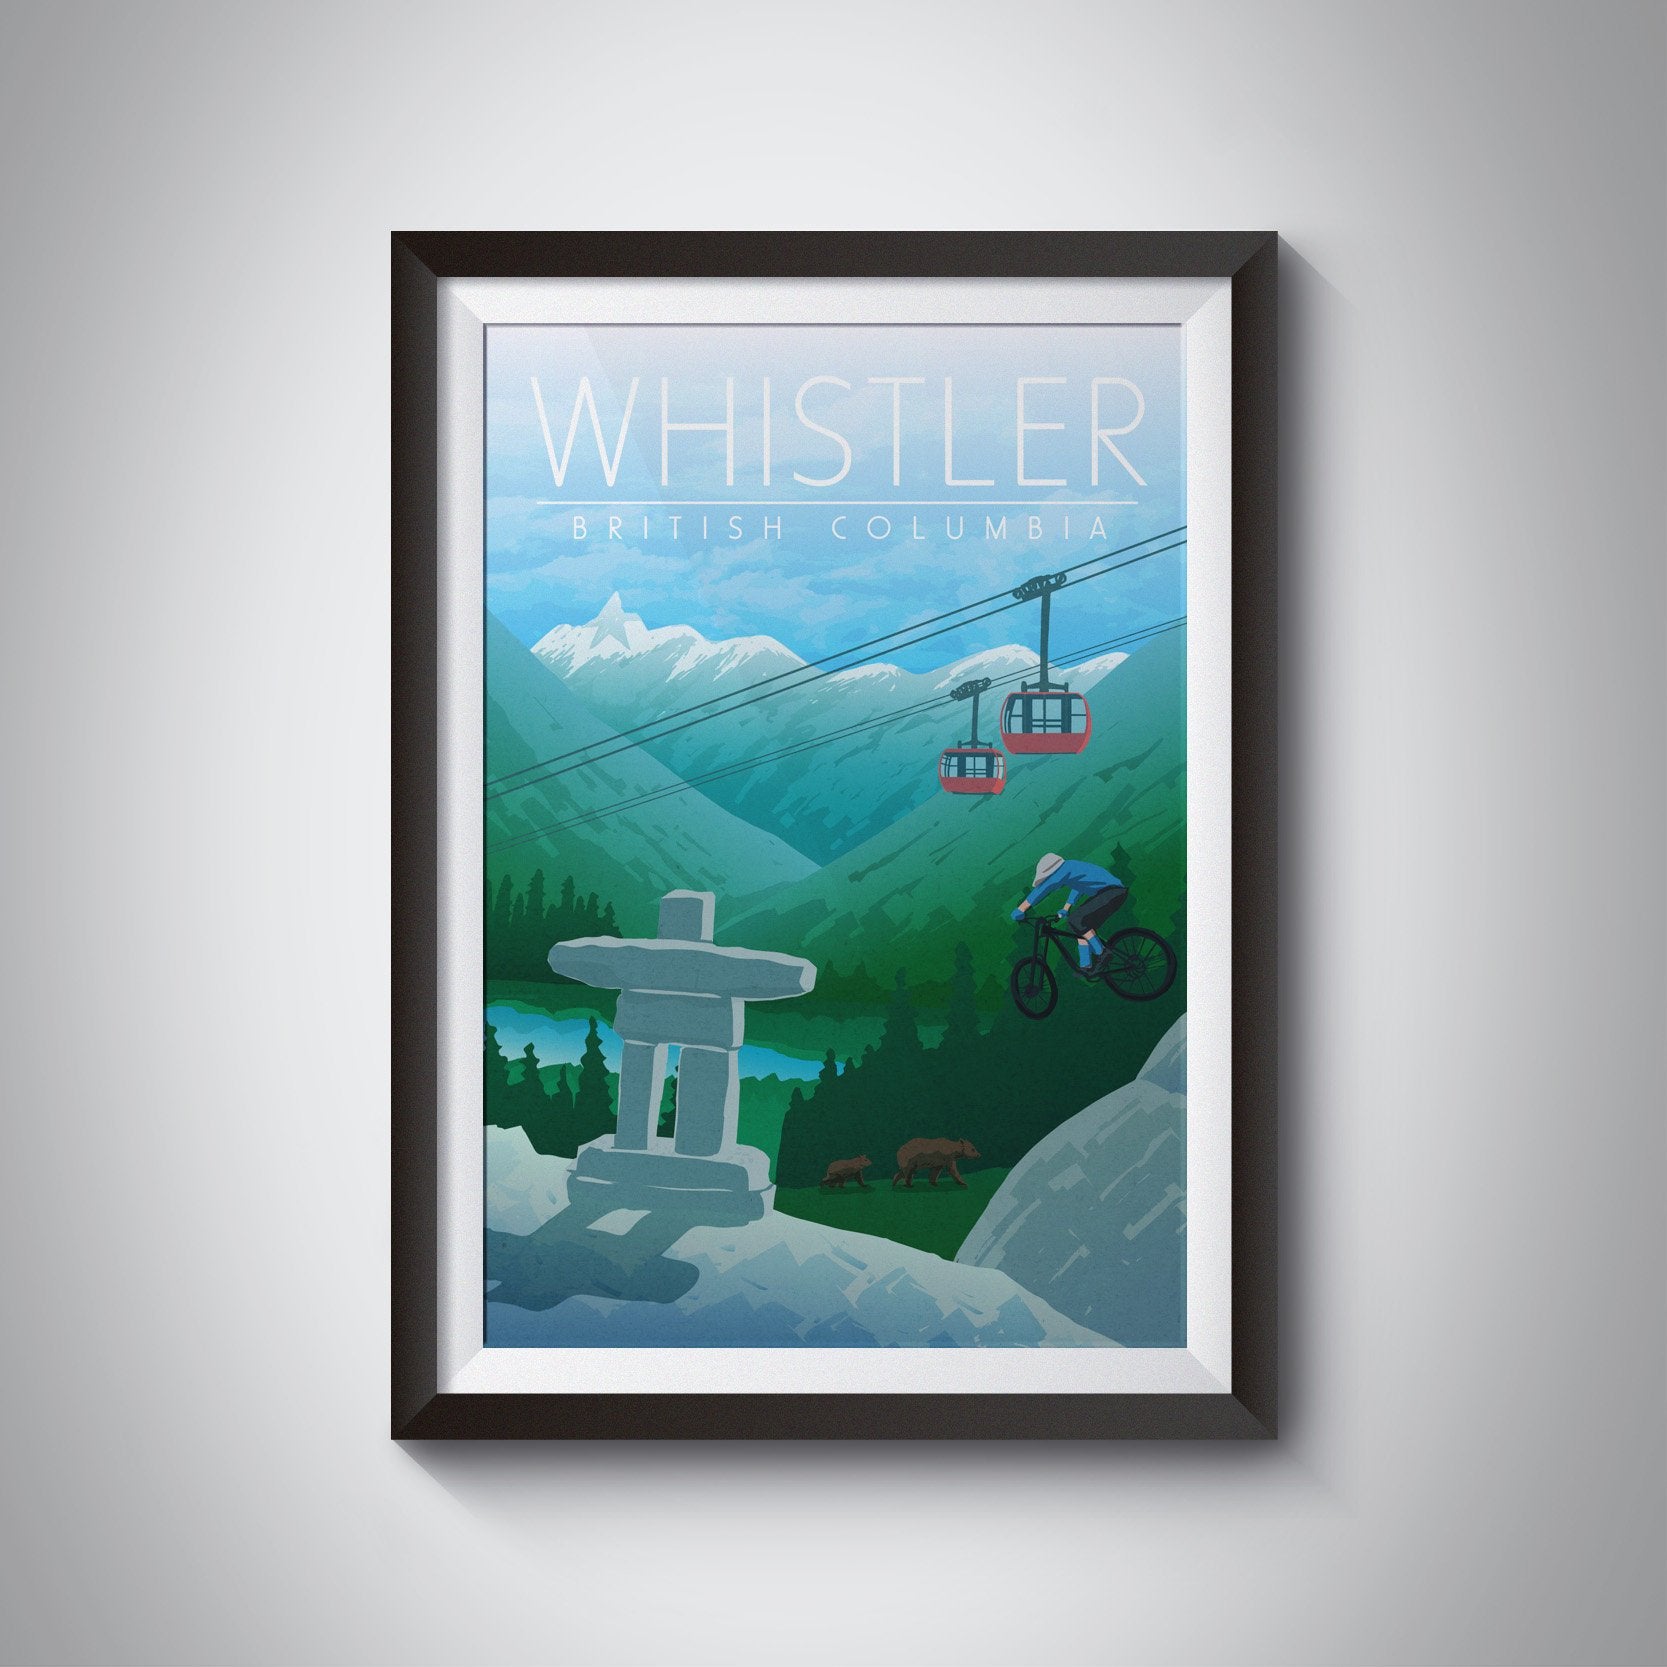 Whistler Canada Travel Poster